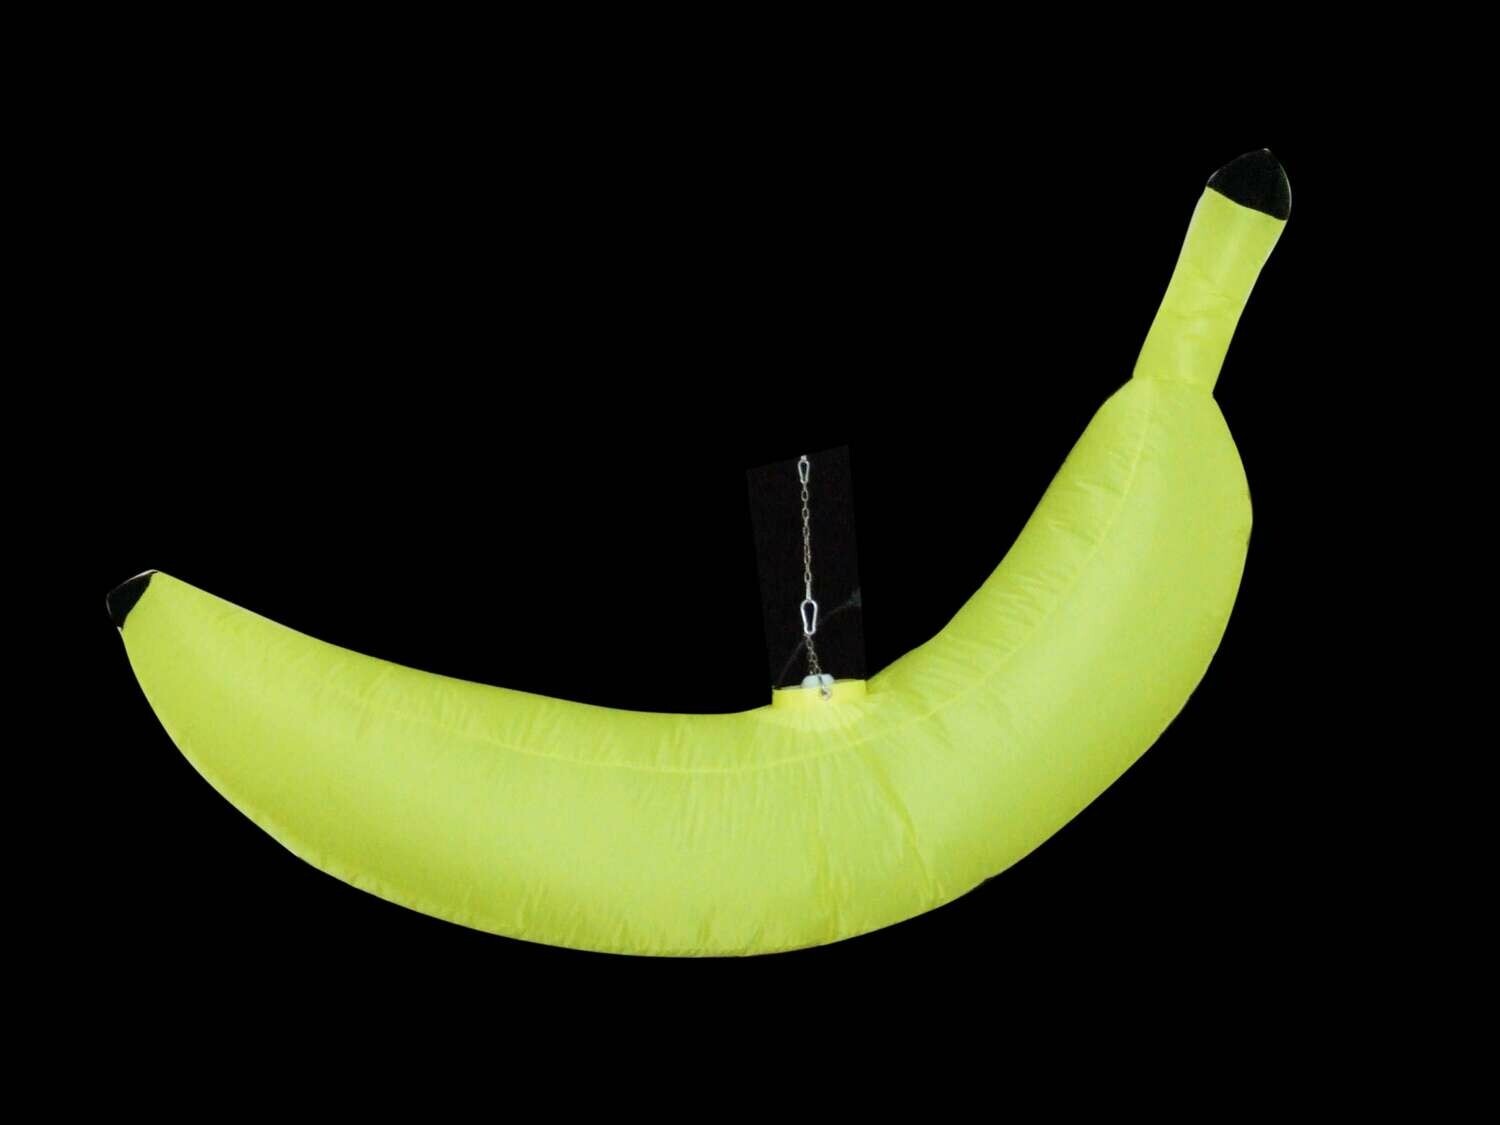 Hanging Inflatable 3D Banana 9ft/275cm Long